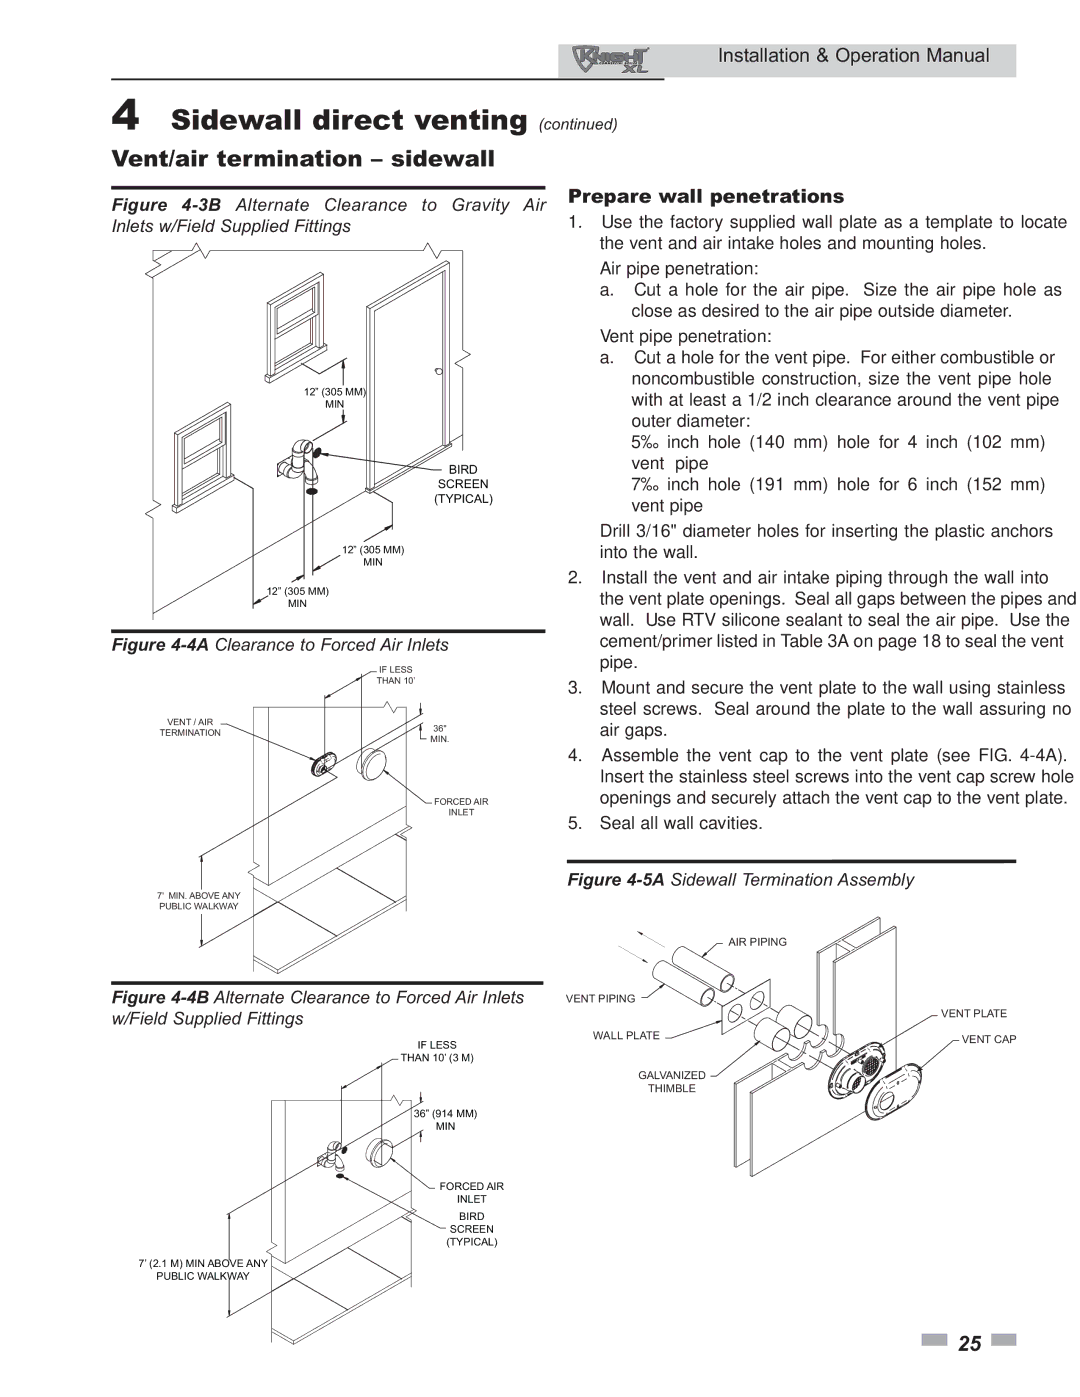 Lochinvar 800 operation manual Prepare wall penetrations, Bird Screen Typical 